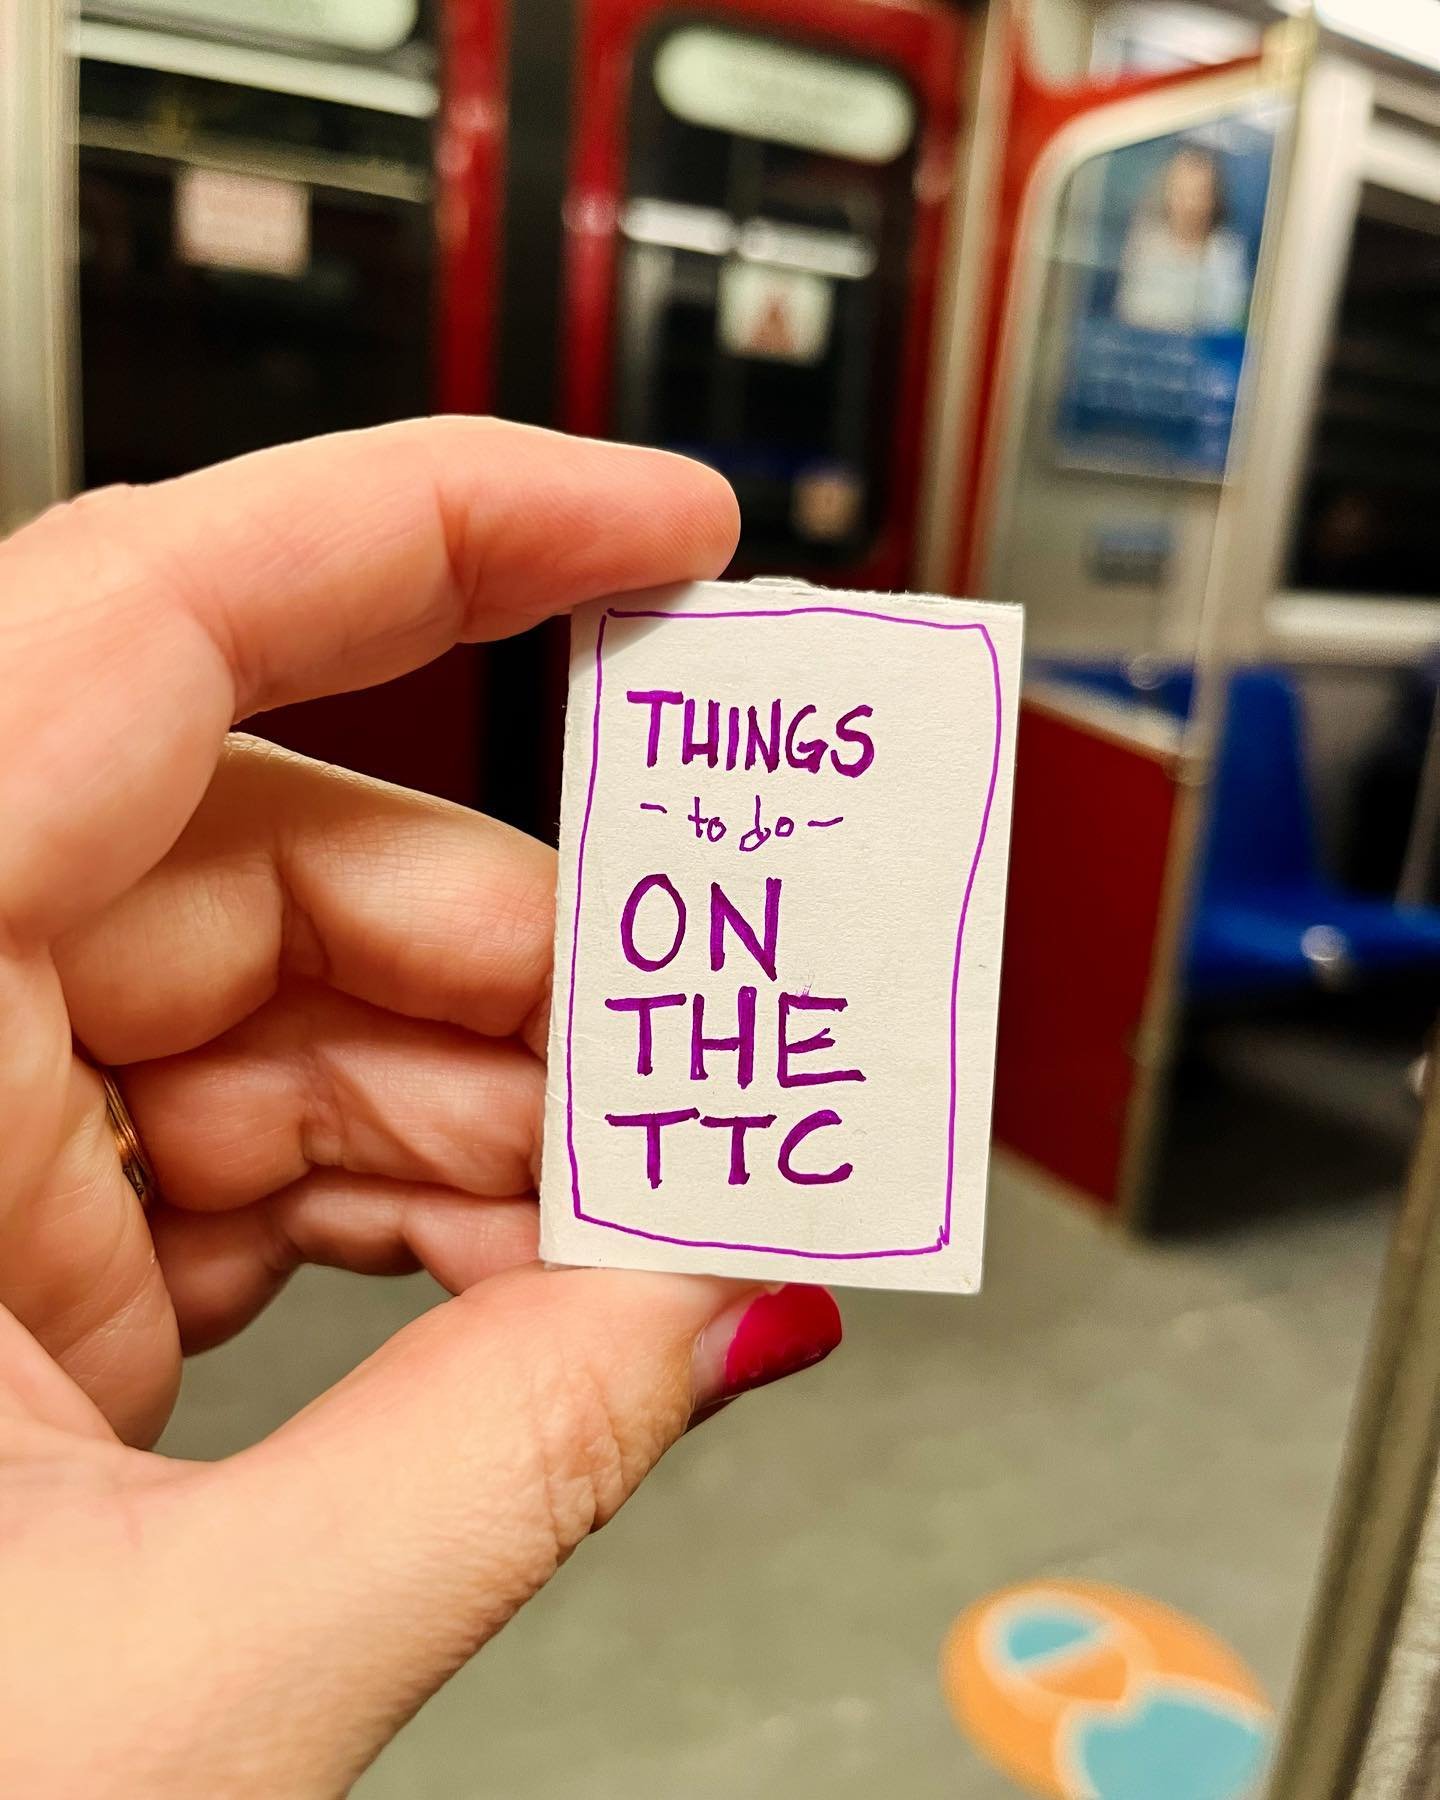 THINGS TO DO ON THE TTC: a mini-zine of things I did when I forgot my book for a trip across town. Maybe you can enjoy similarly nice activities on the TTC @takethettc 

#minizine #ttc #ttcjourney #toronto #transit #subway #subwayart #zinemaking #zin